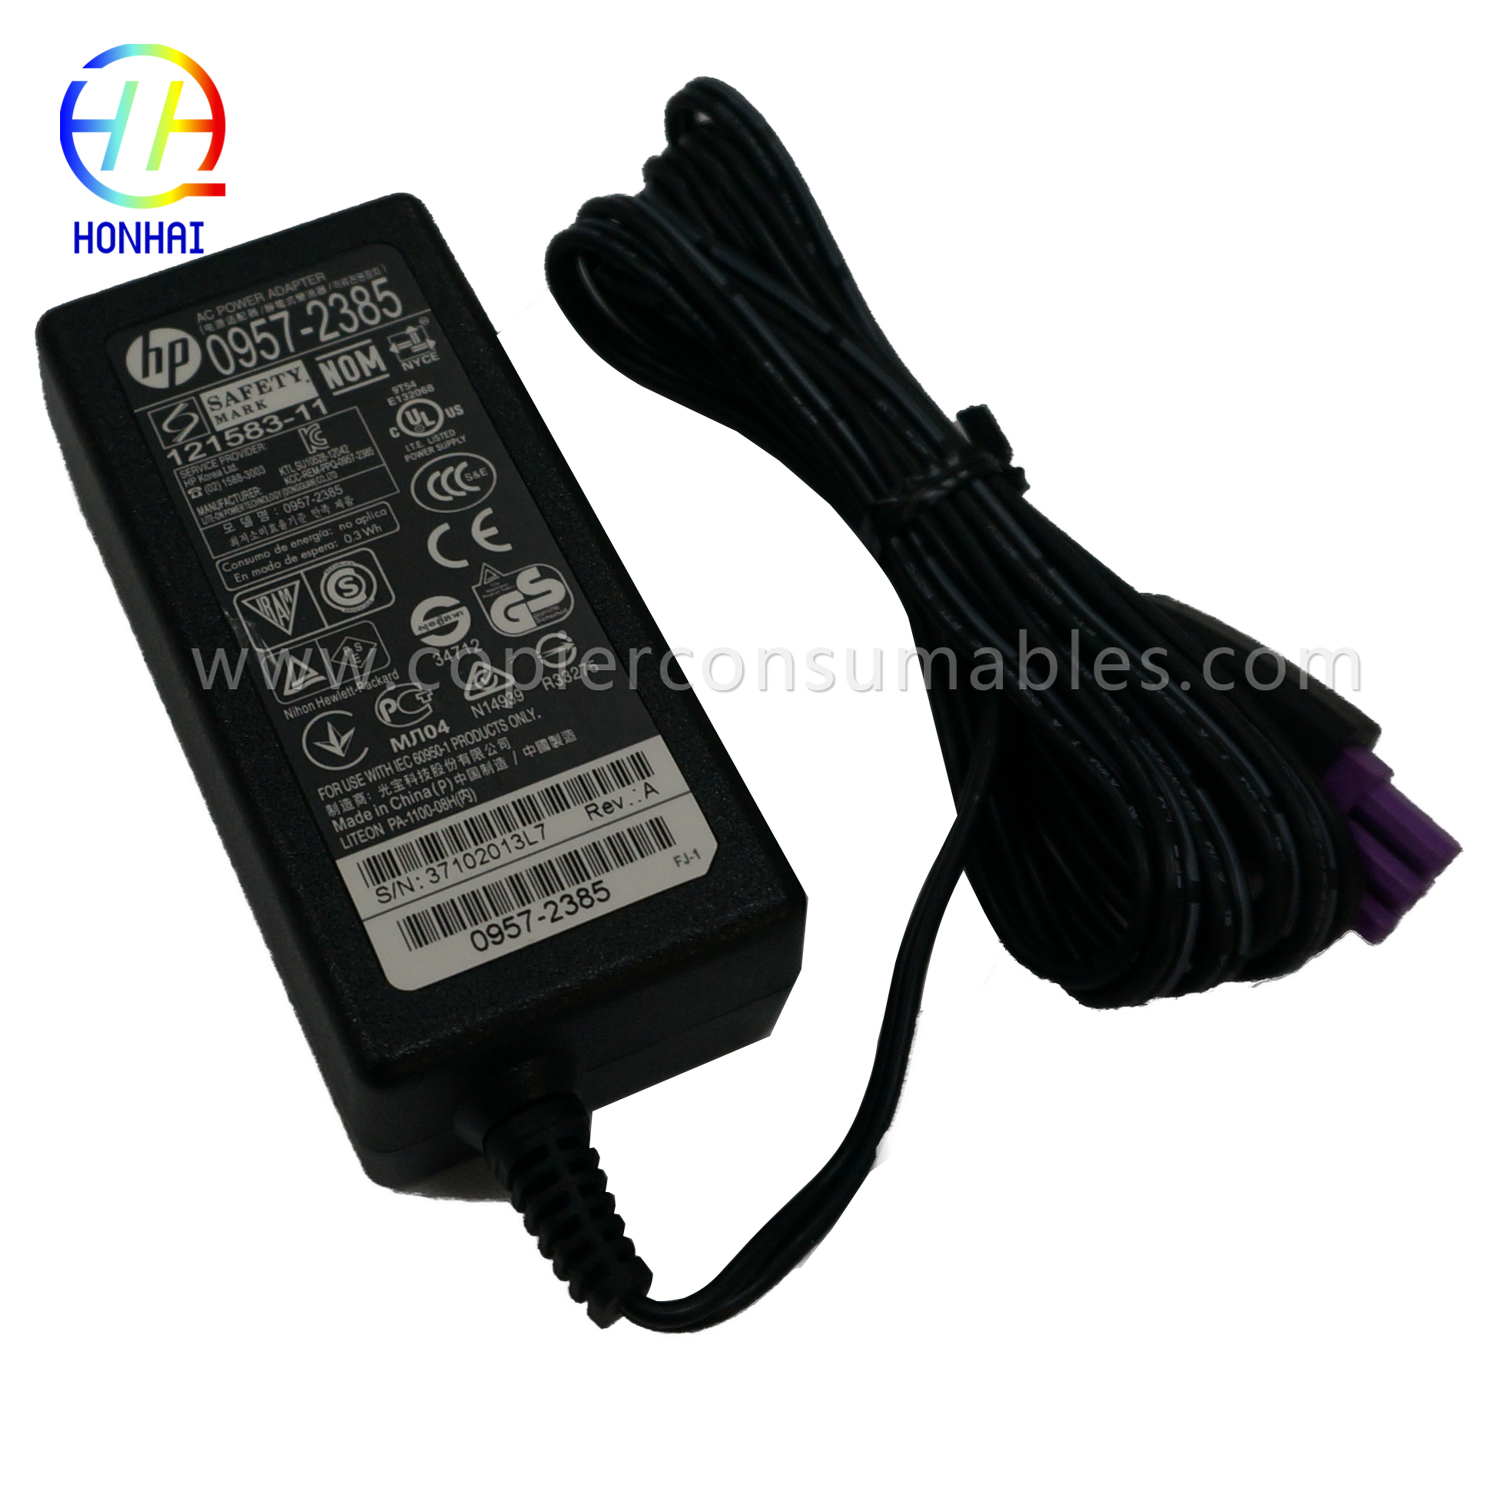 Power Adapter HP 1010 1510 1518 0957-2385 (1) 拷贝